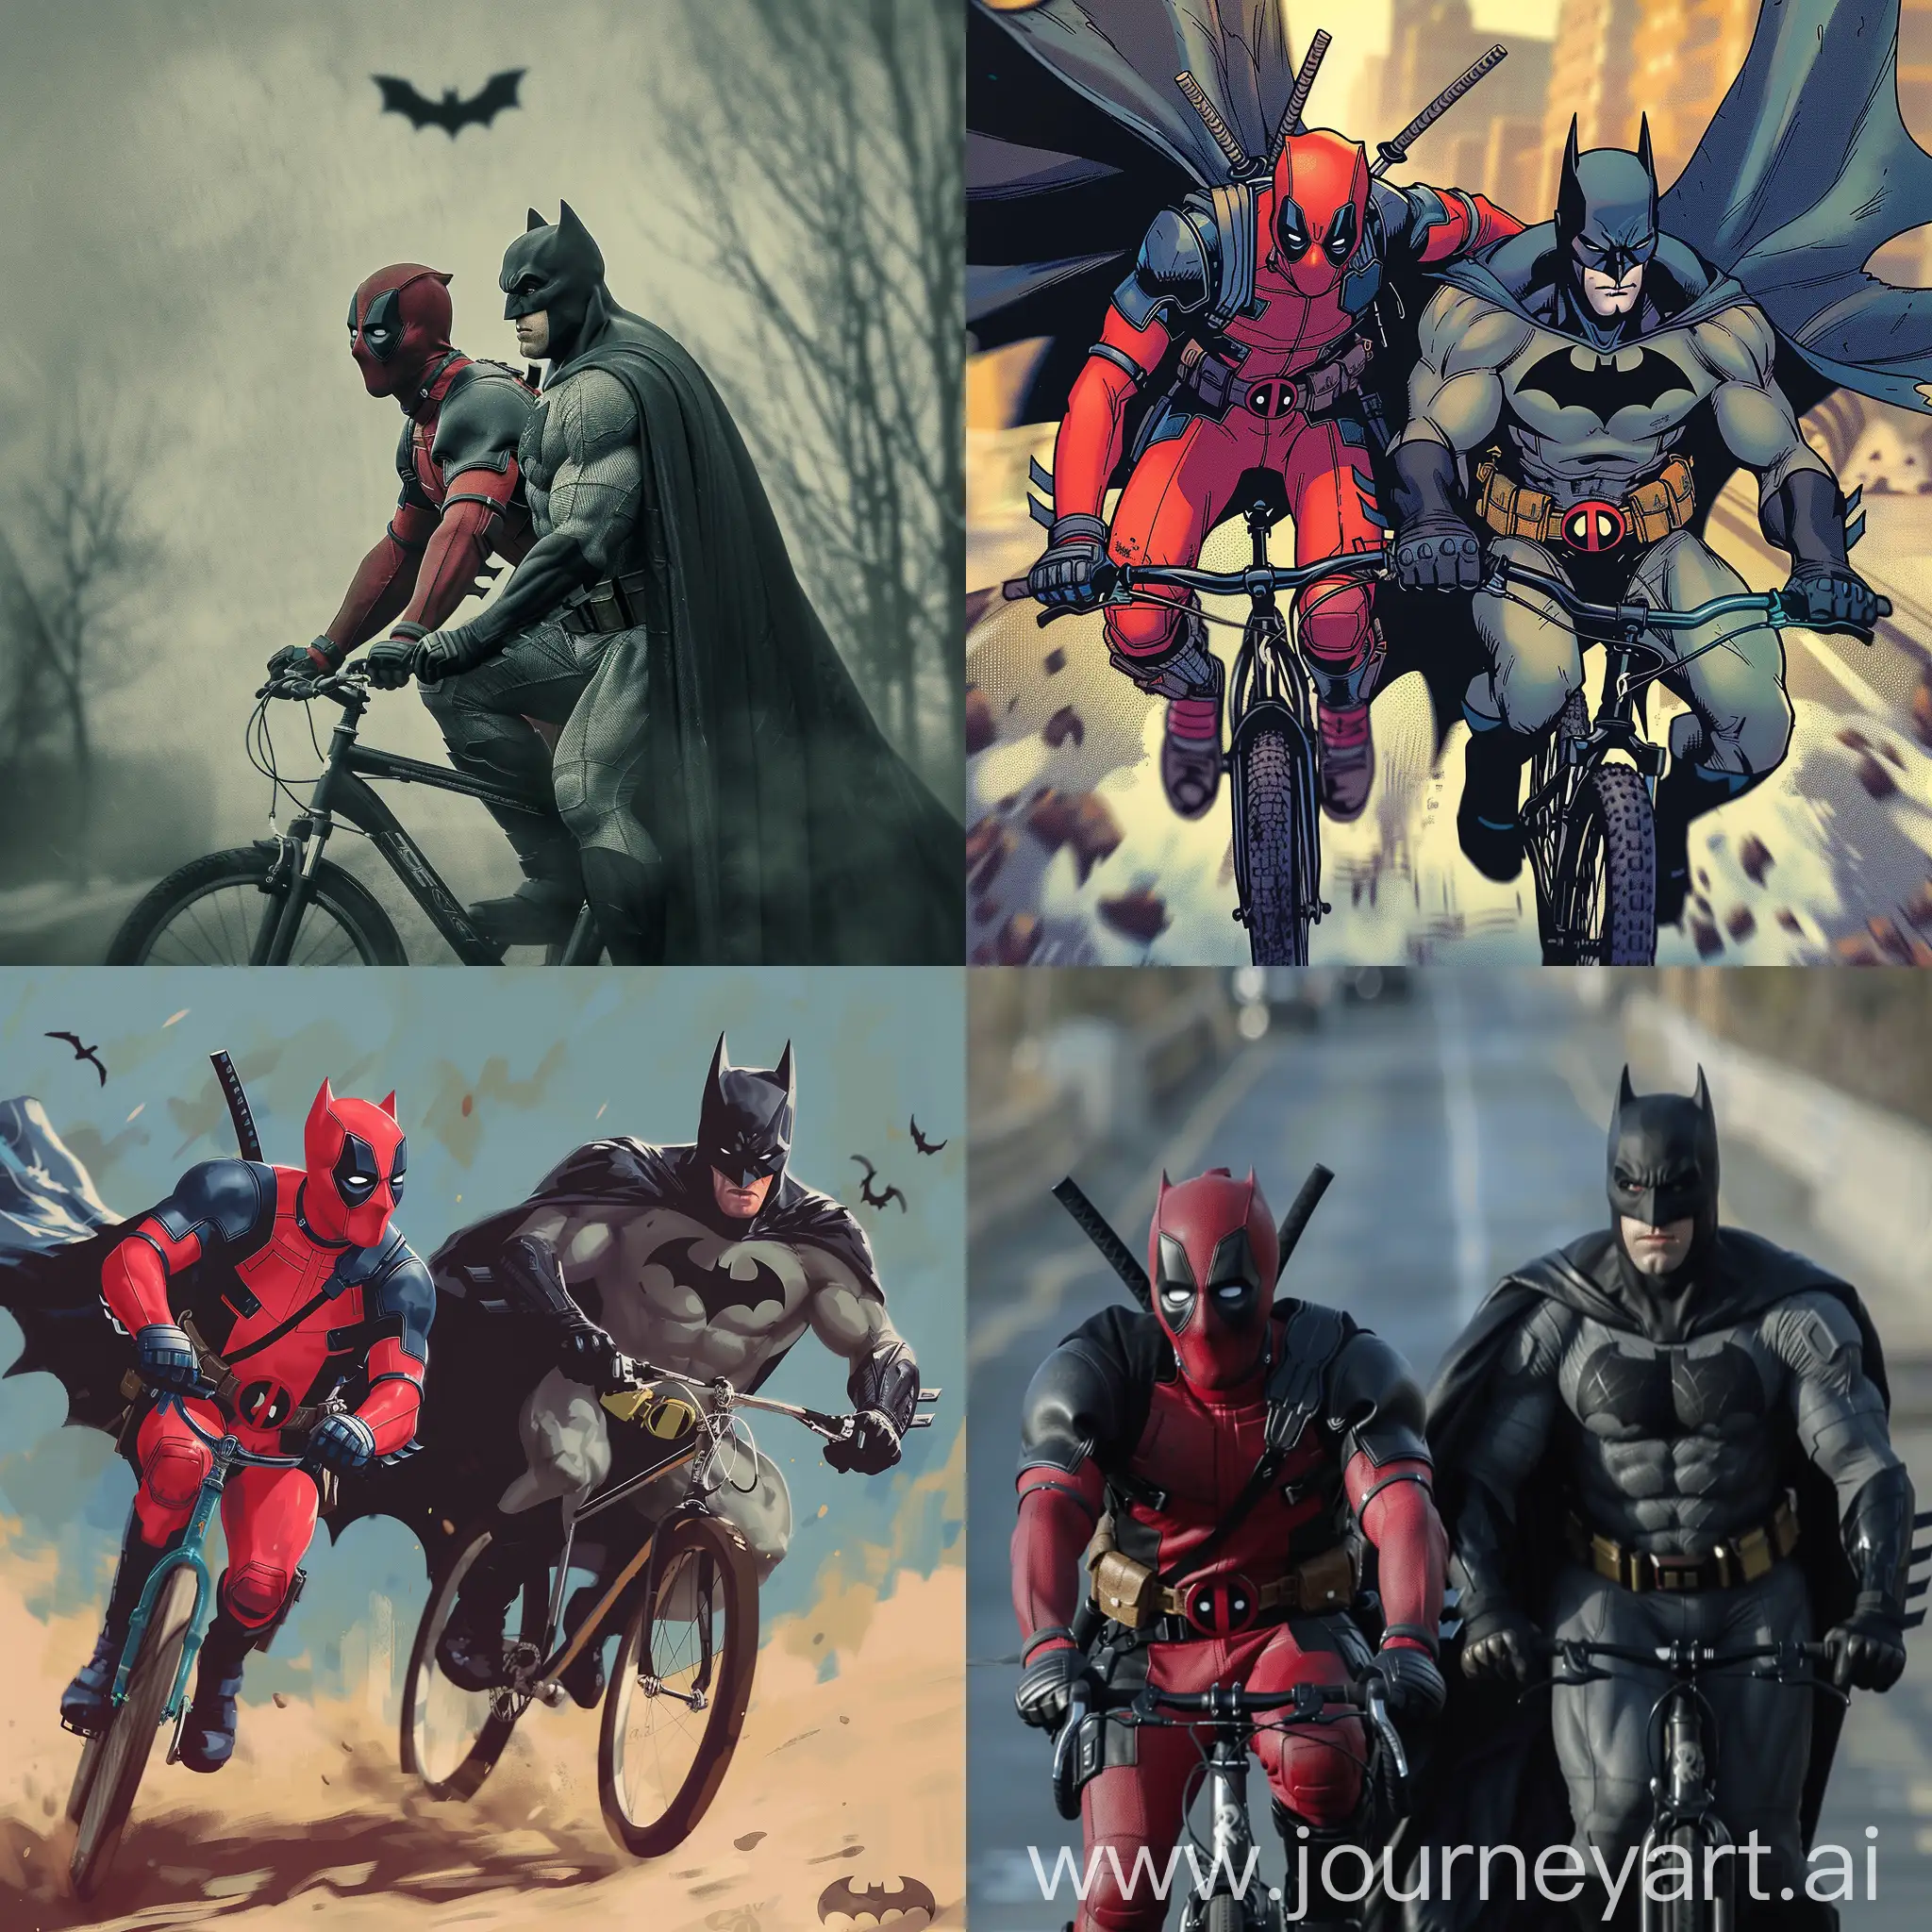 Deadpool-and-Batman-Riding-on-Bike-Epic-Superhero-Duo-Adventure